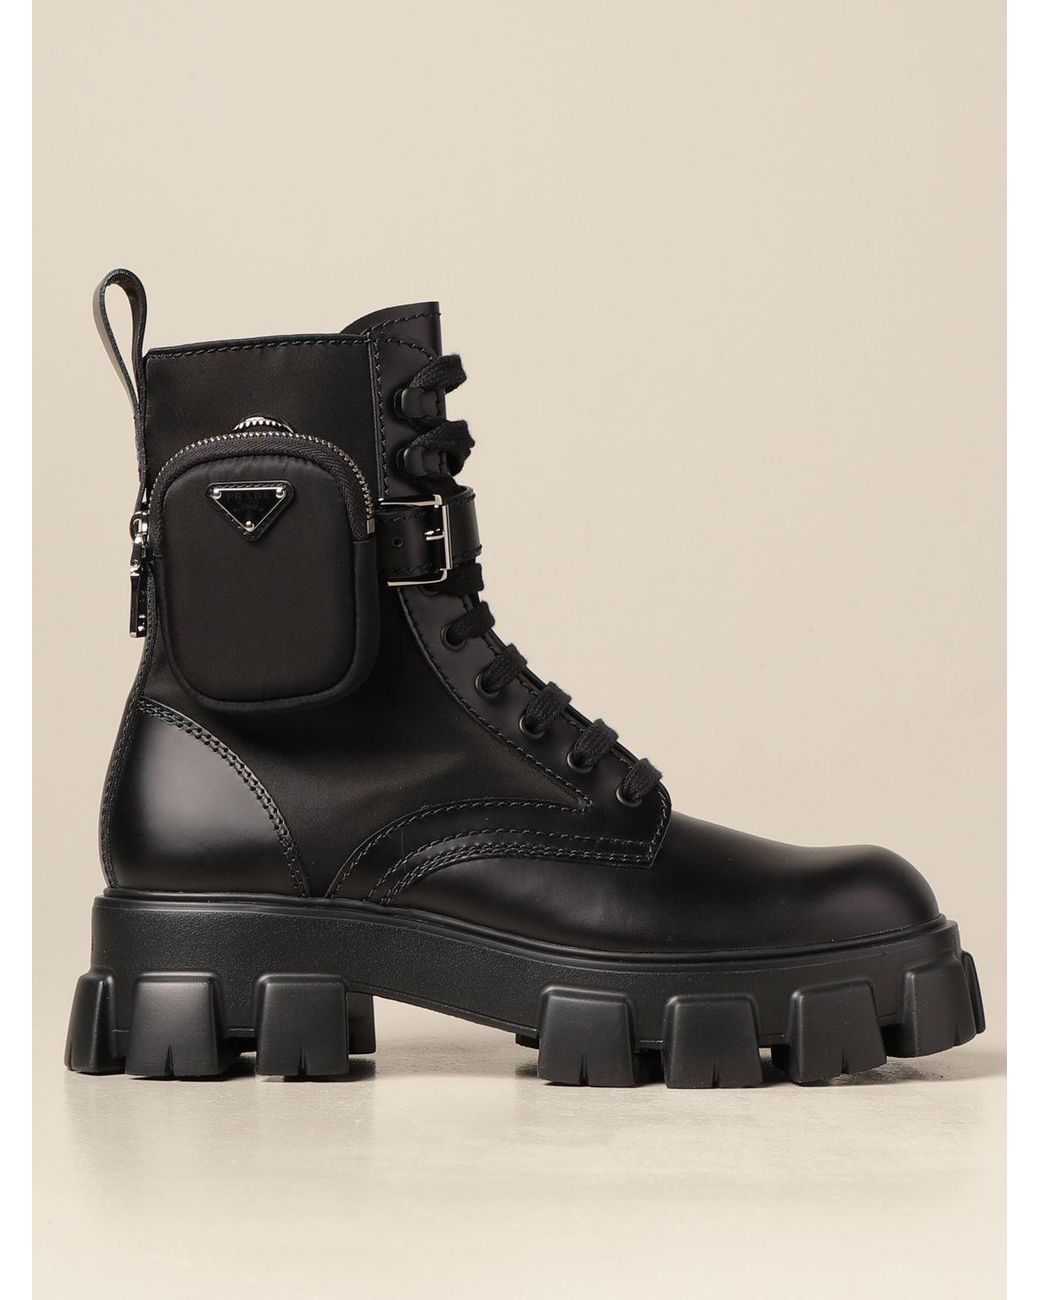 Prada Boots in Black for Men - Lyst